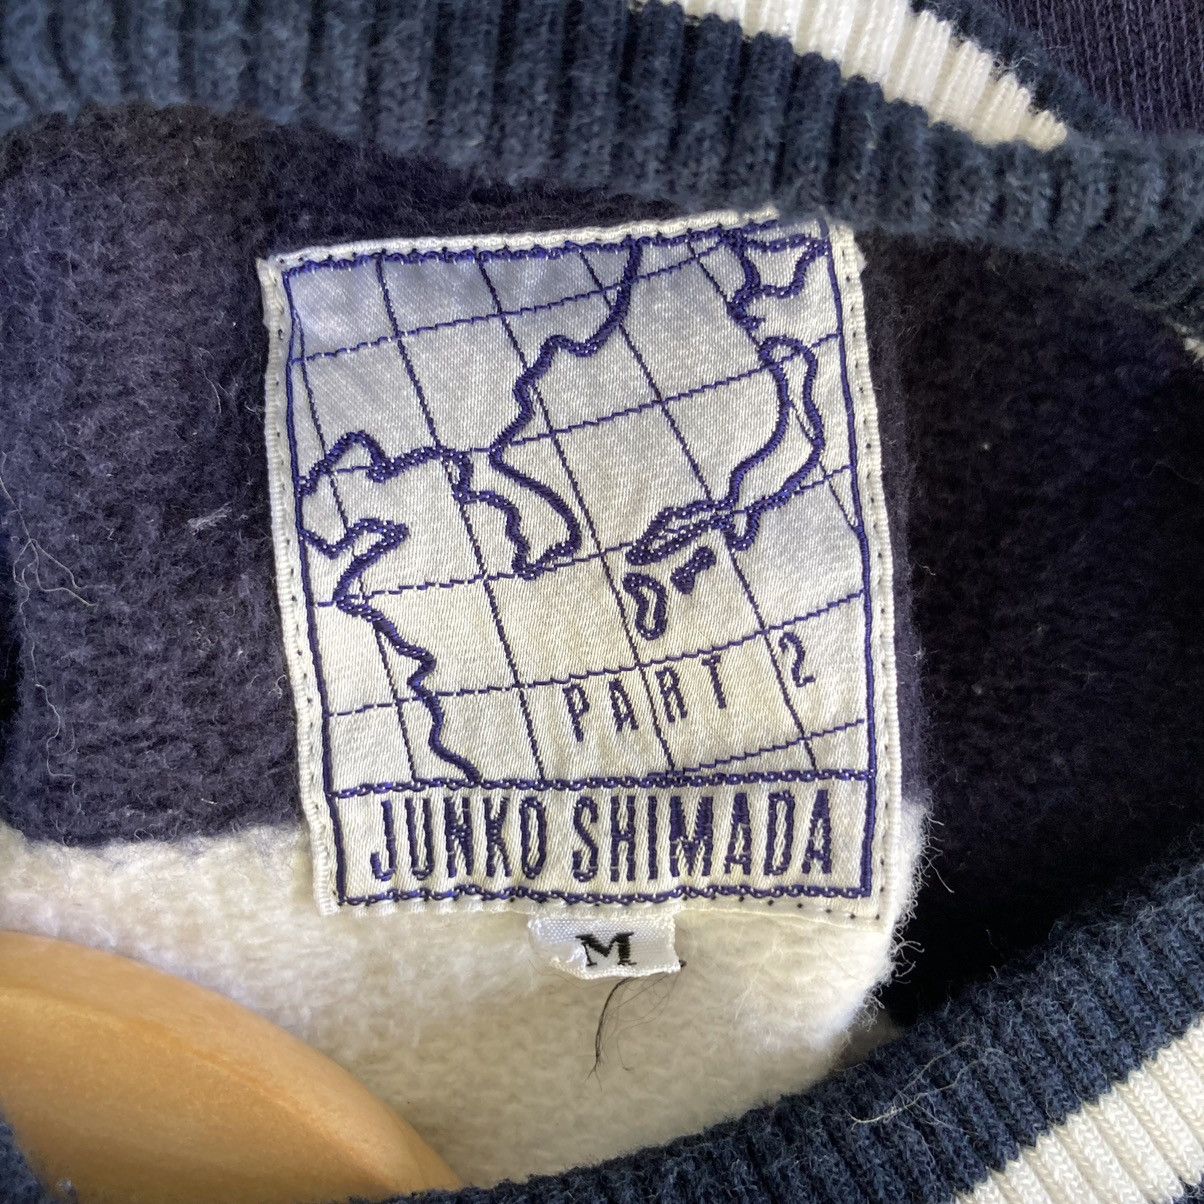 Vintage Junko Shimada Black White Sweatshirt - 5